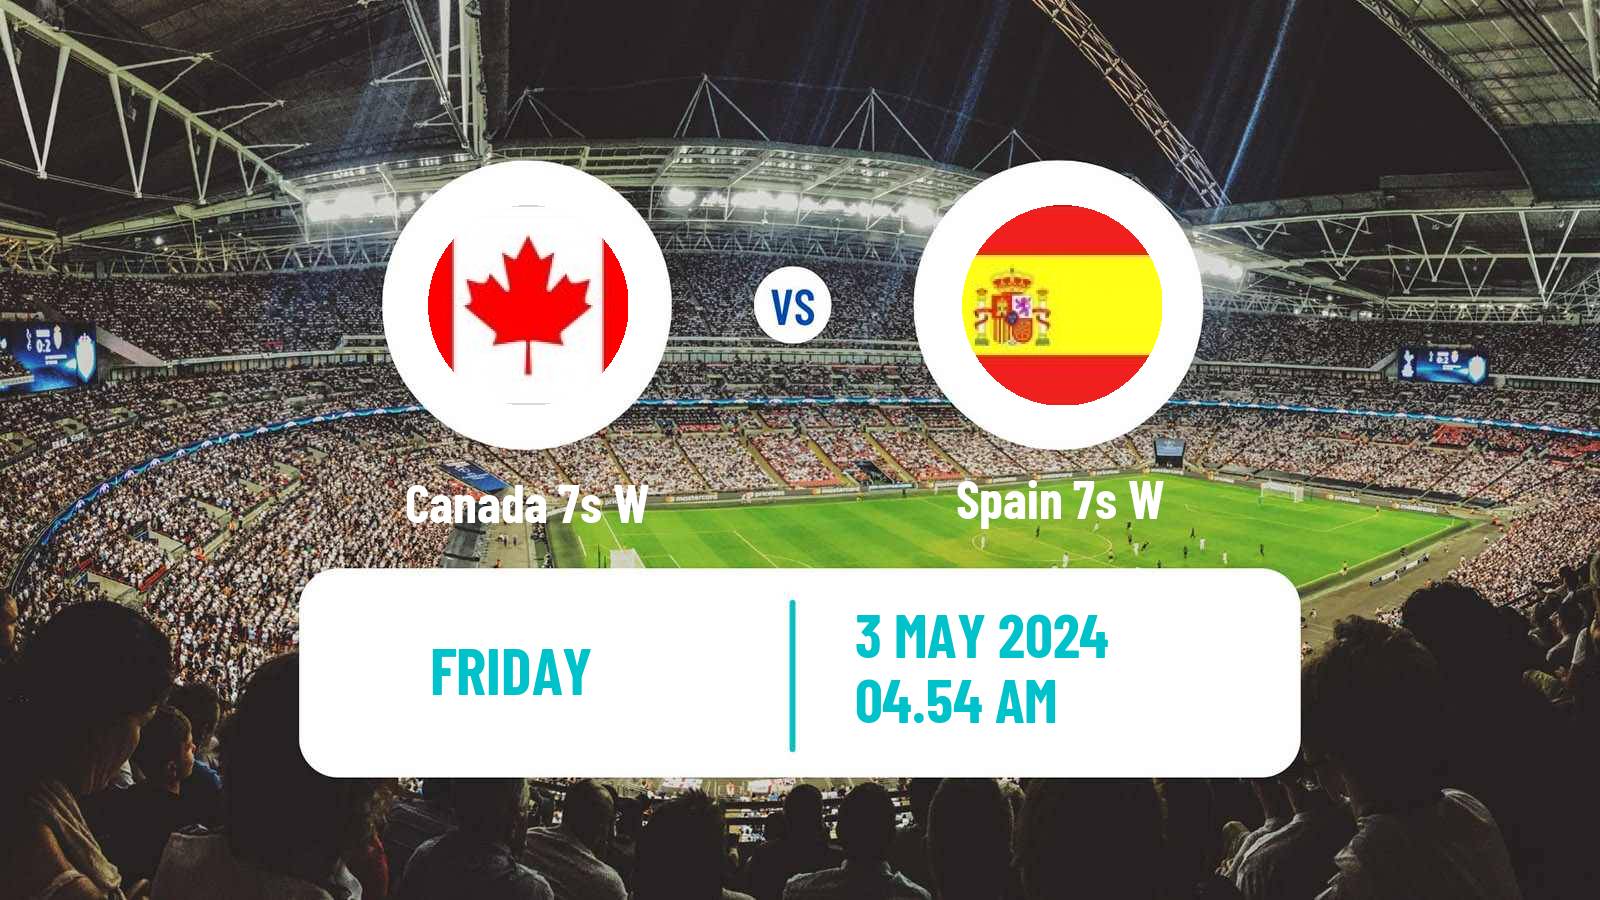 Soccer Sevens World Series Women - Singapore Canada 7s W - Spain 7s W